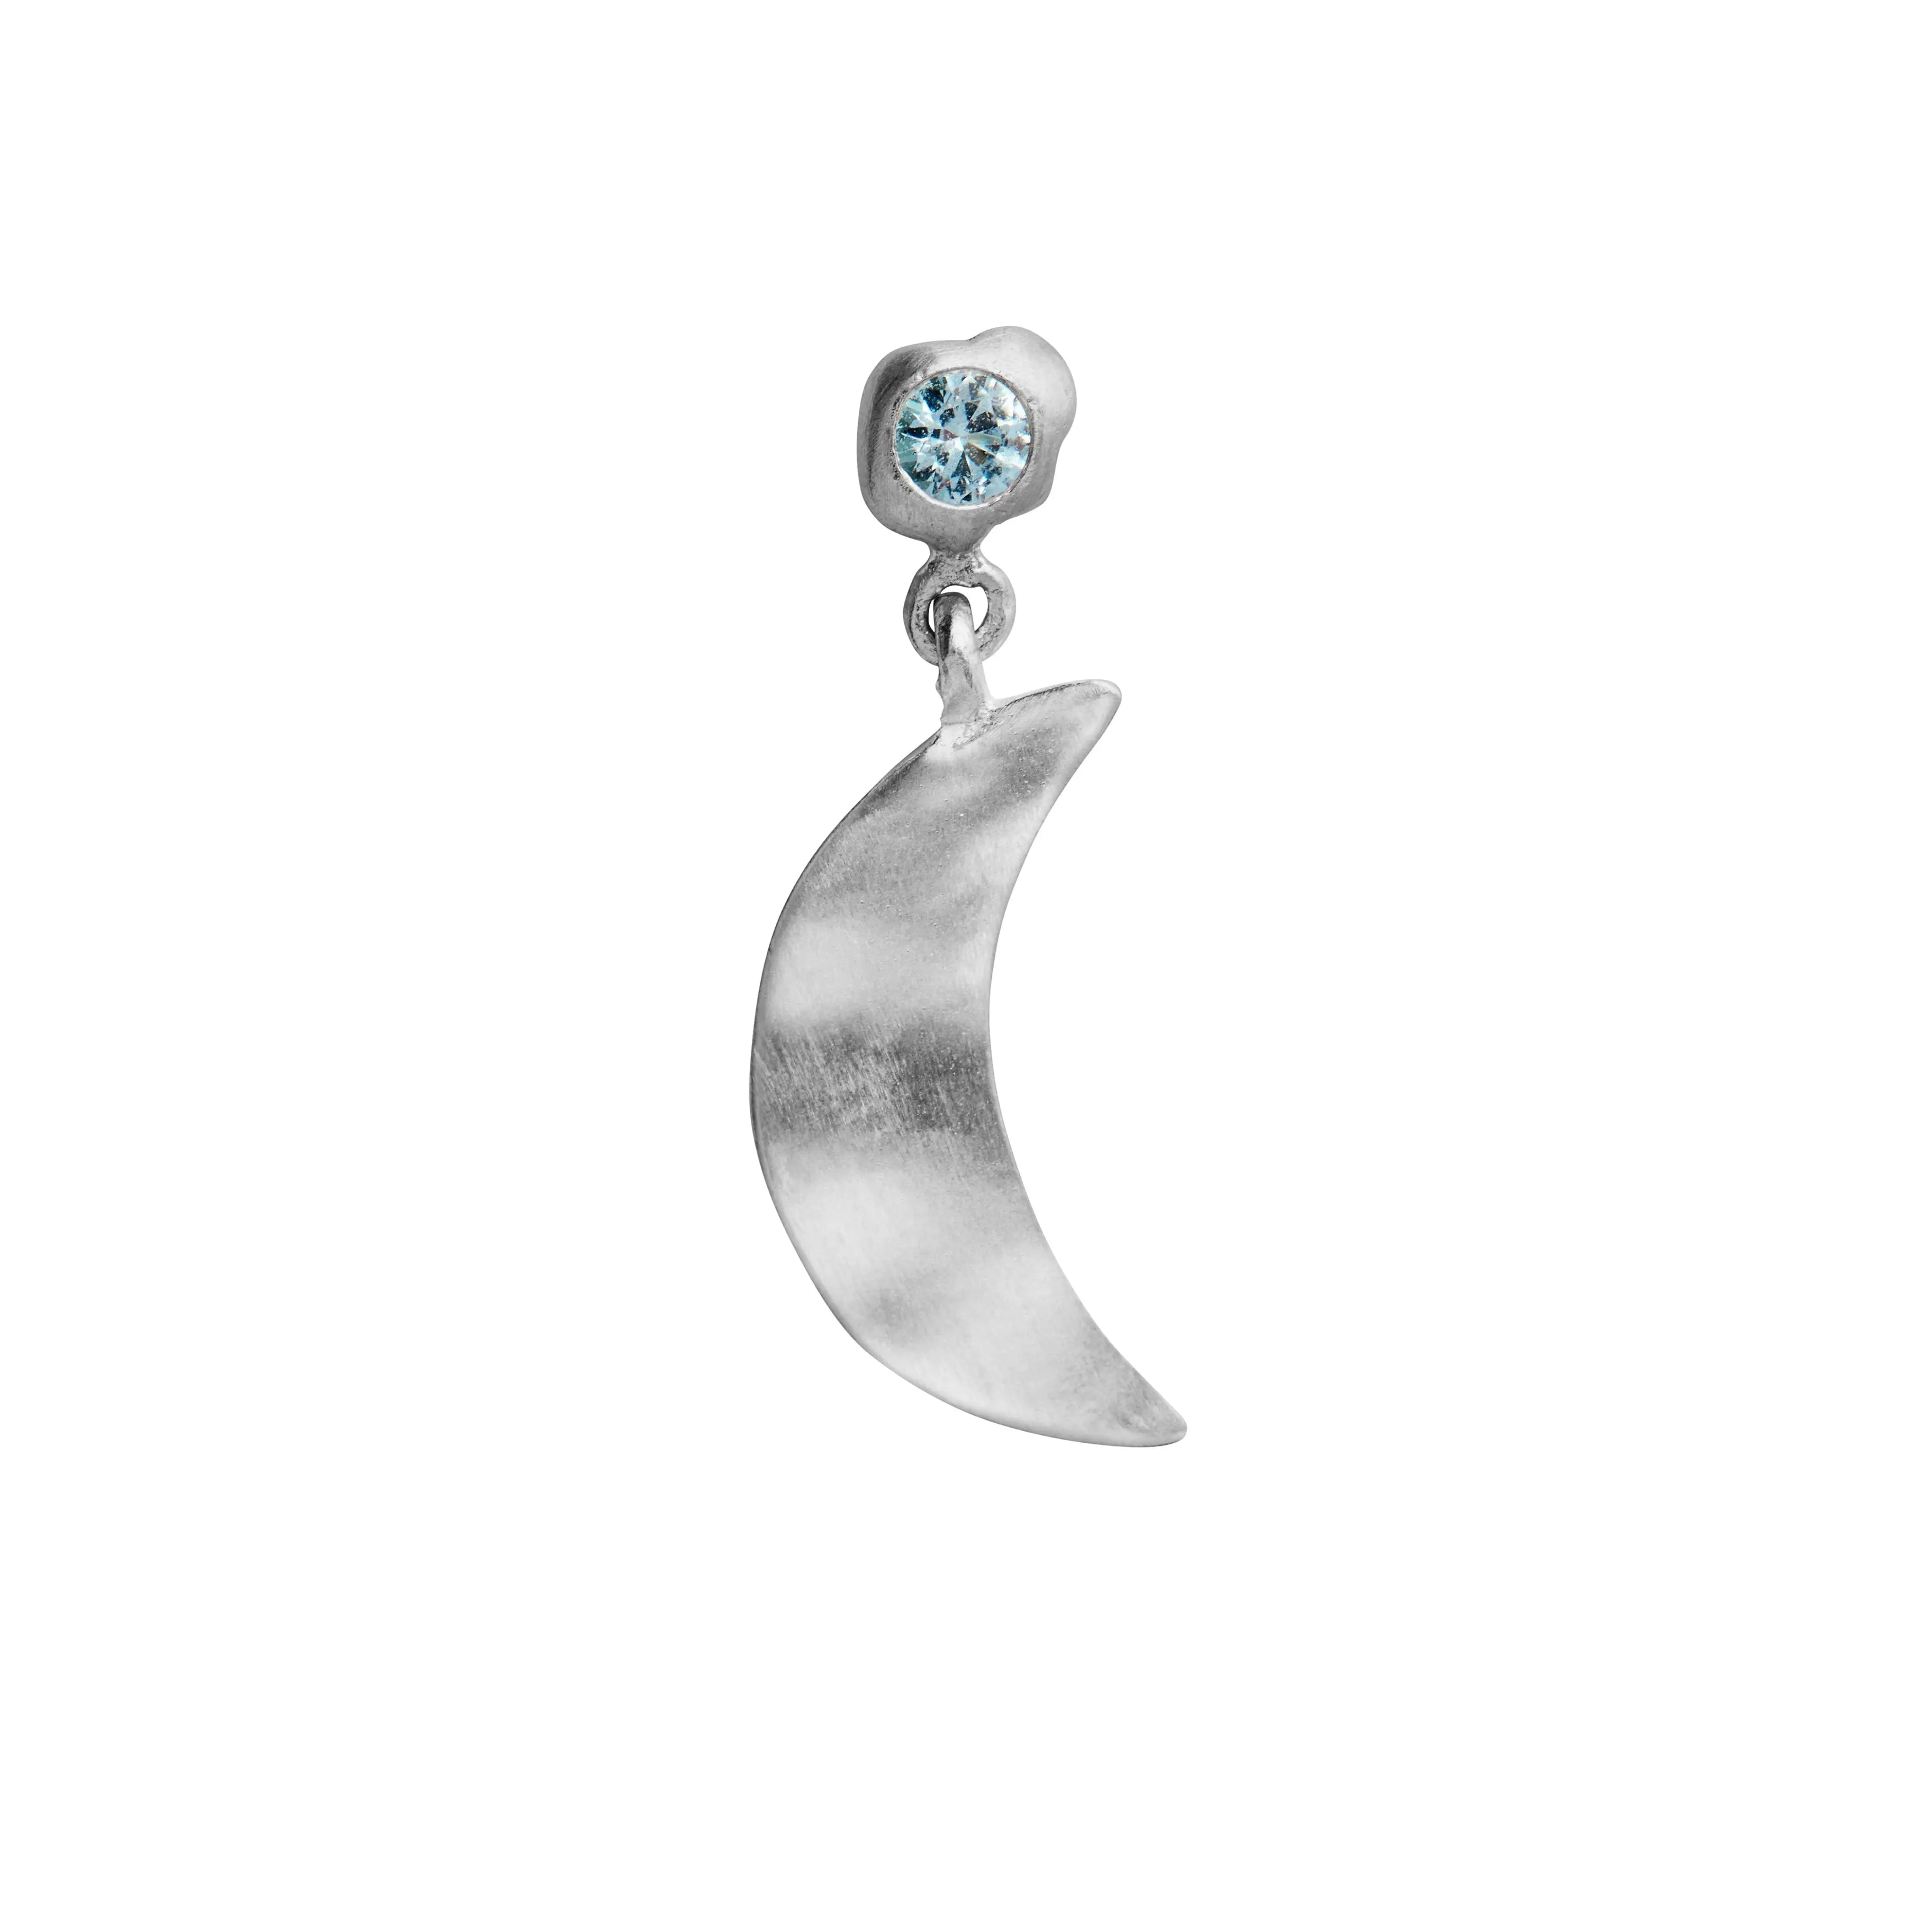 Big dot bella moon with blue lagune stone ørering - Sølv fra Stine A Jewelry